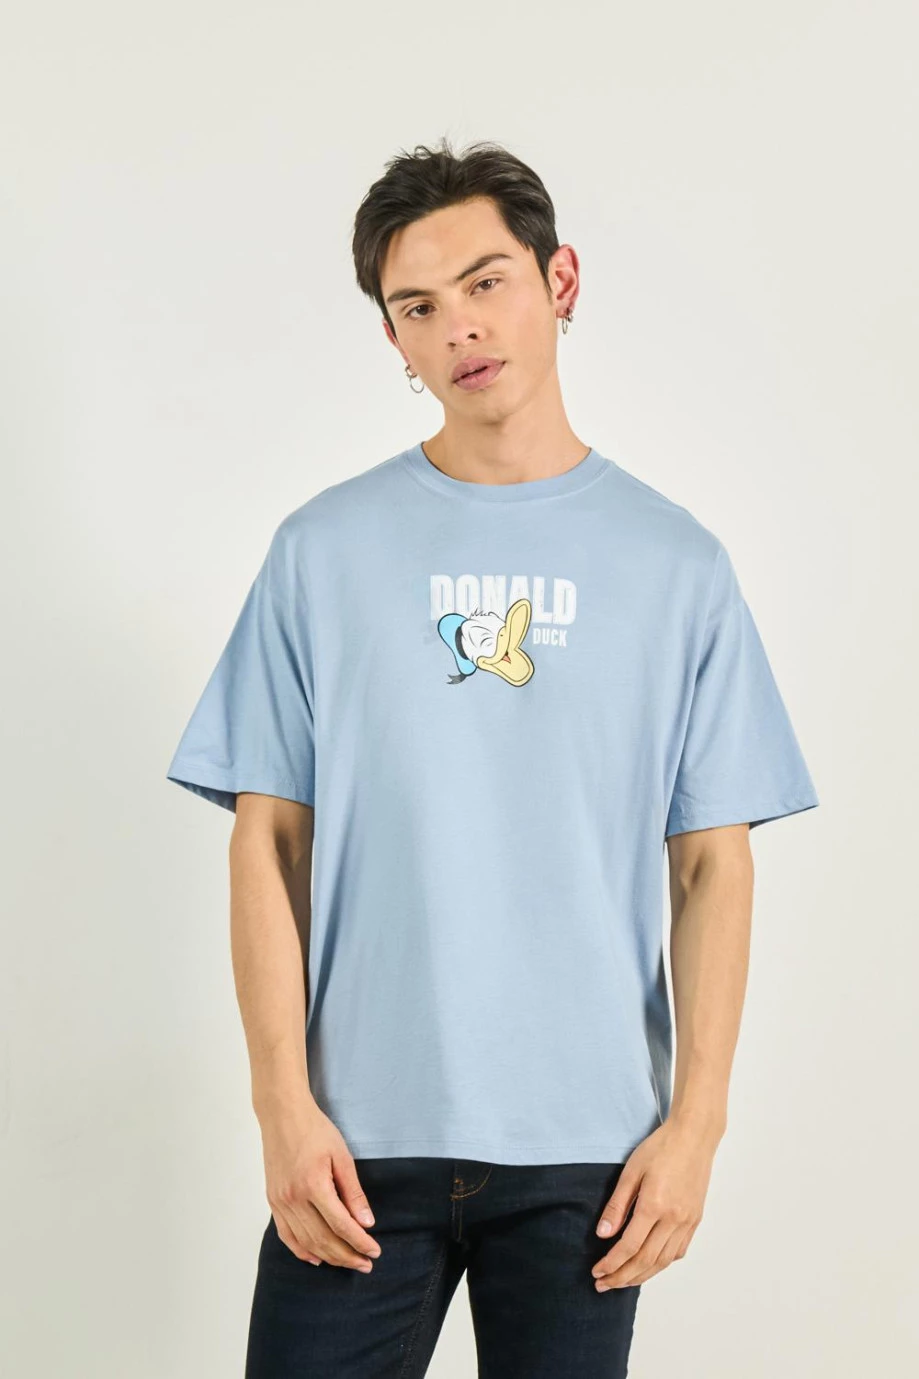 Camiseta oversize azul con diseños de Donald y manga corta